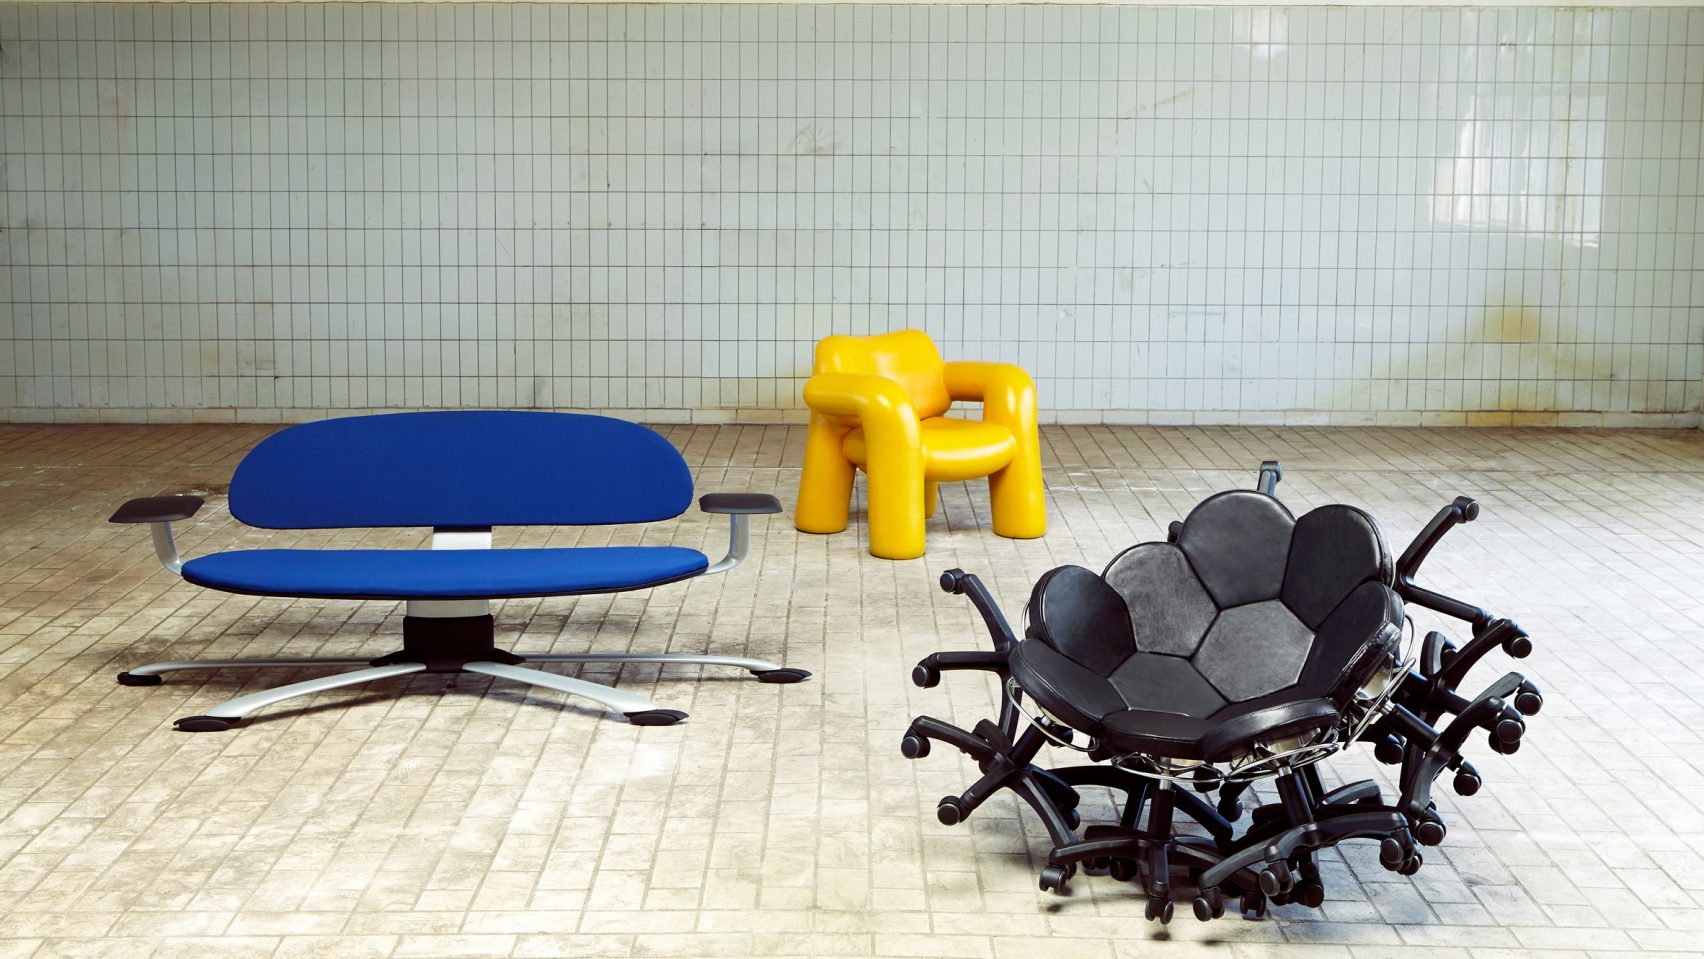 schimmel-schweikle-return-to-default-chairs-office-furniture-design_dezeen_hero-1-1704×959-1